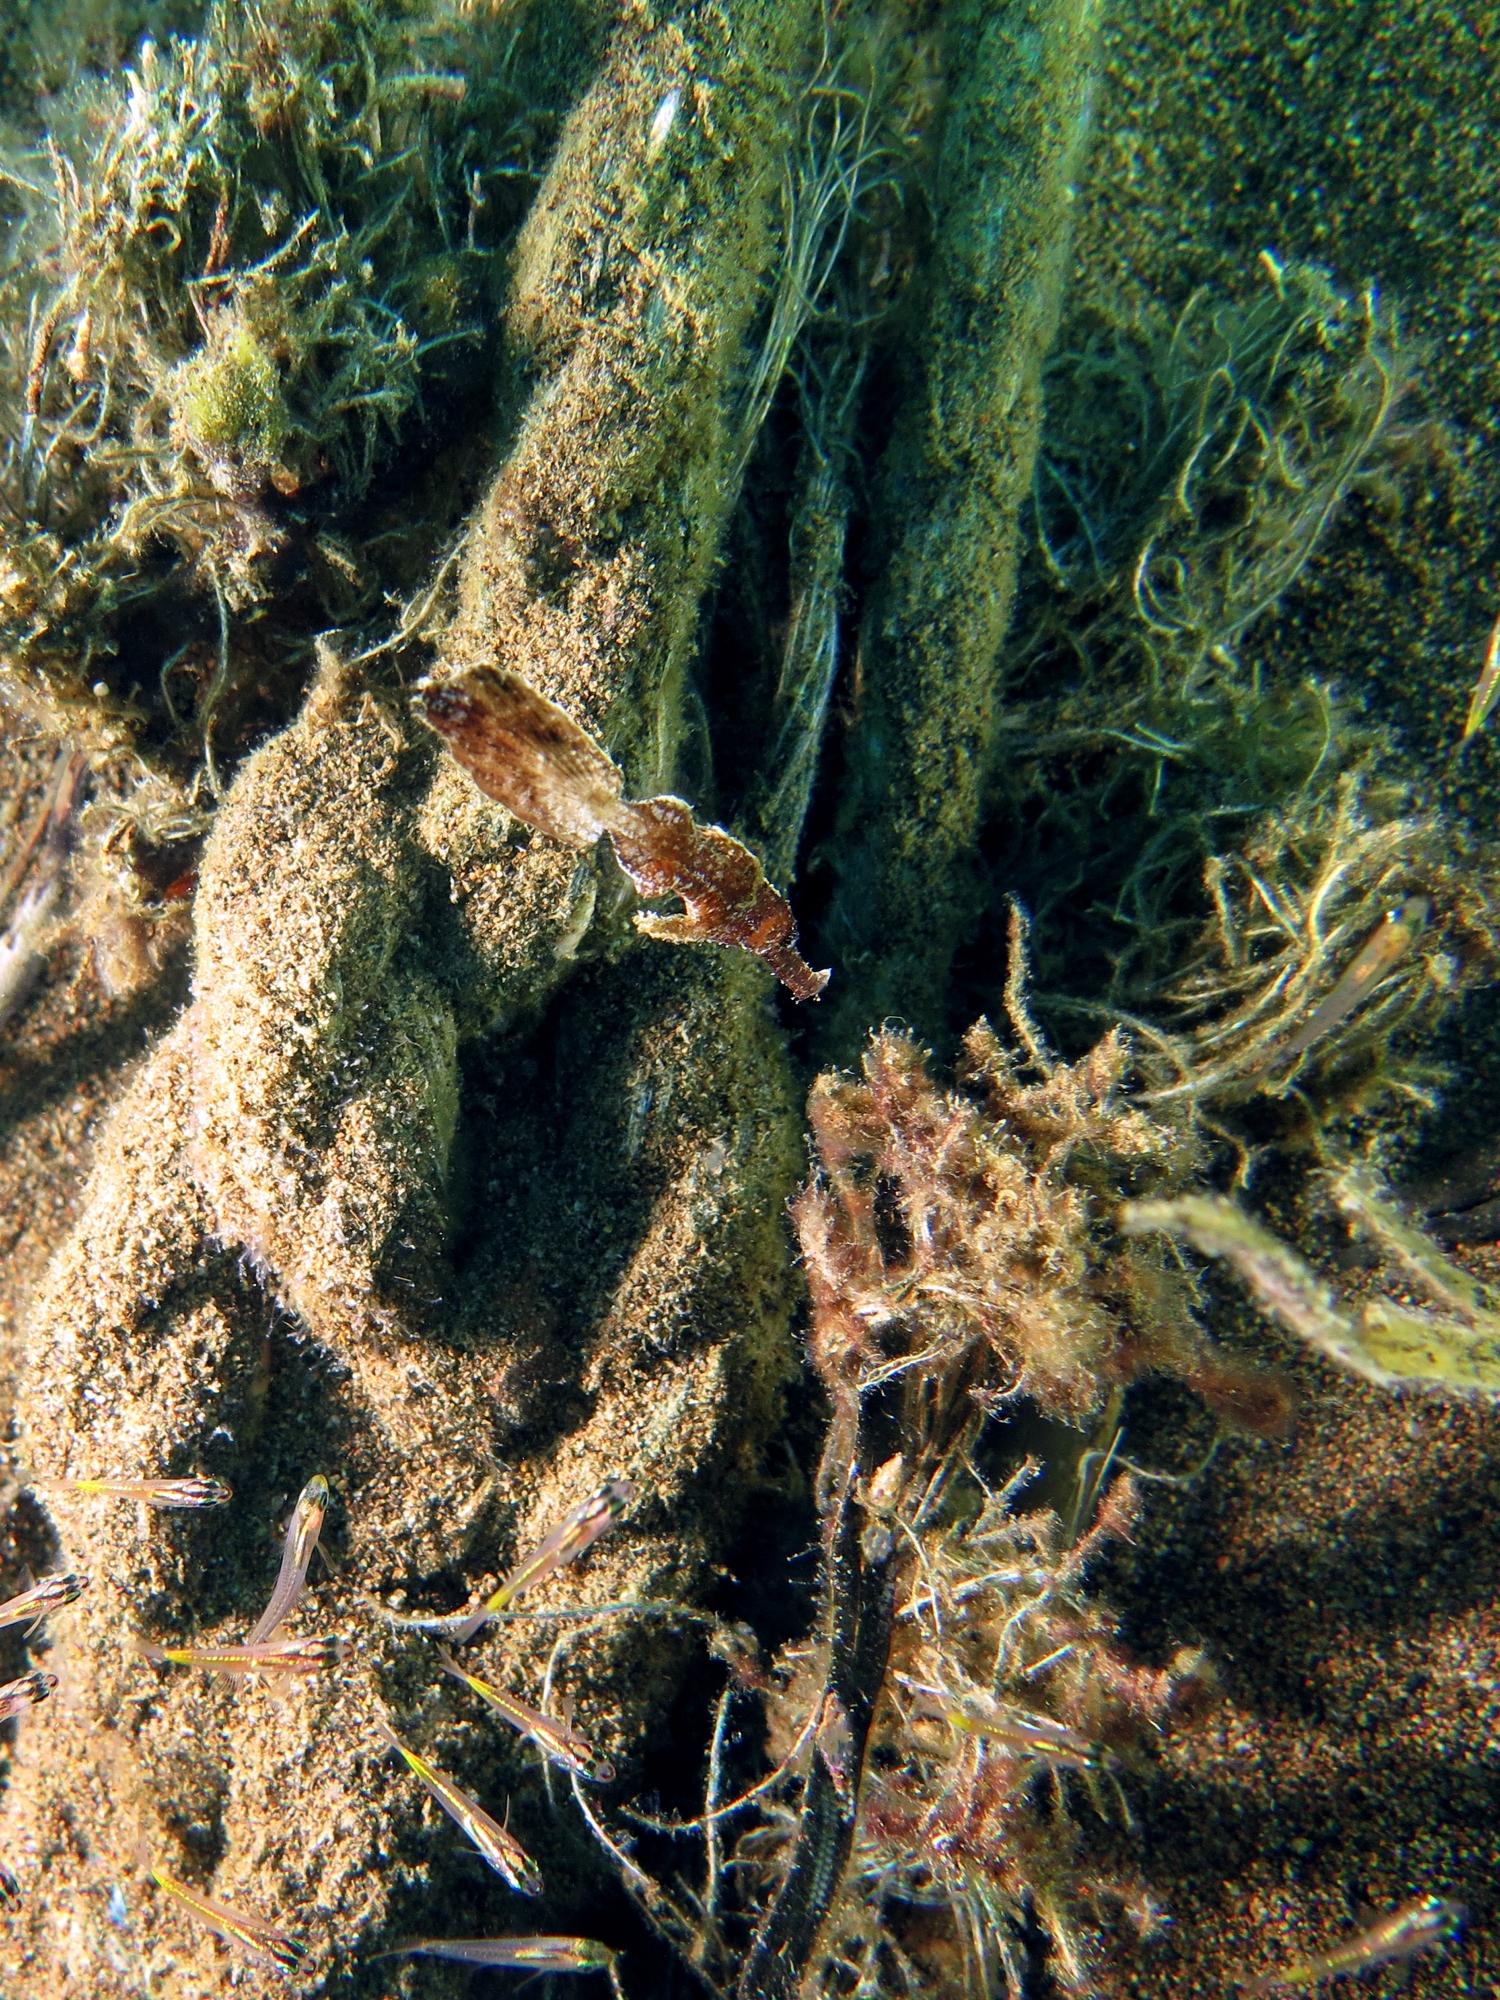 Solenostomus cyanopterus, Ostorhinchus sp.